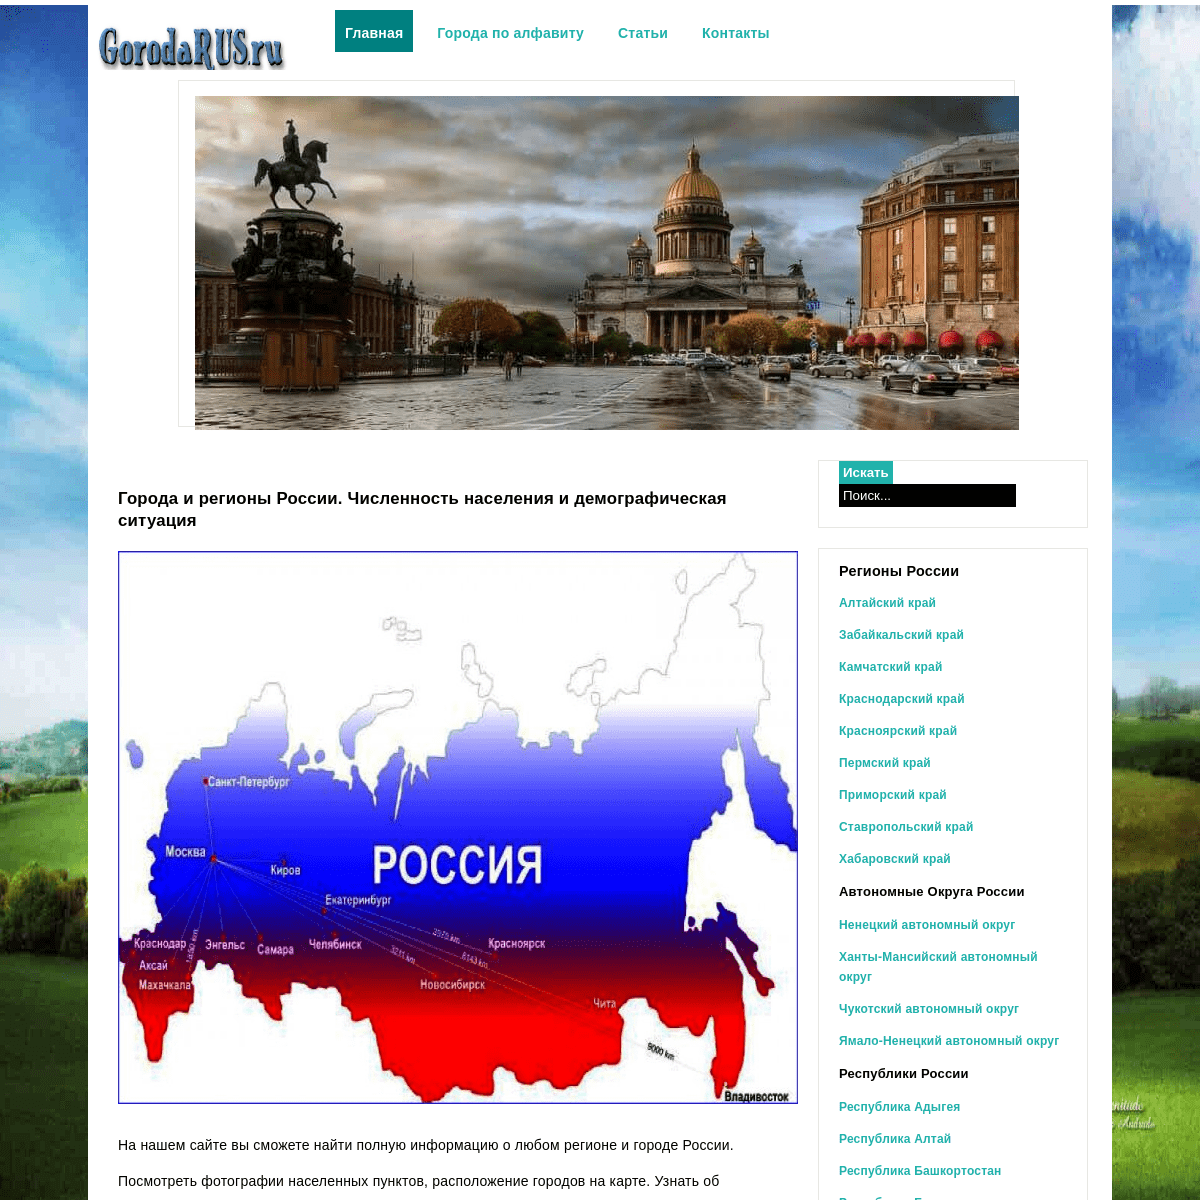 A complete backup of gorodarus.ru